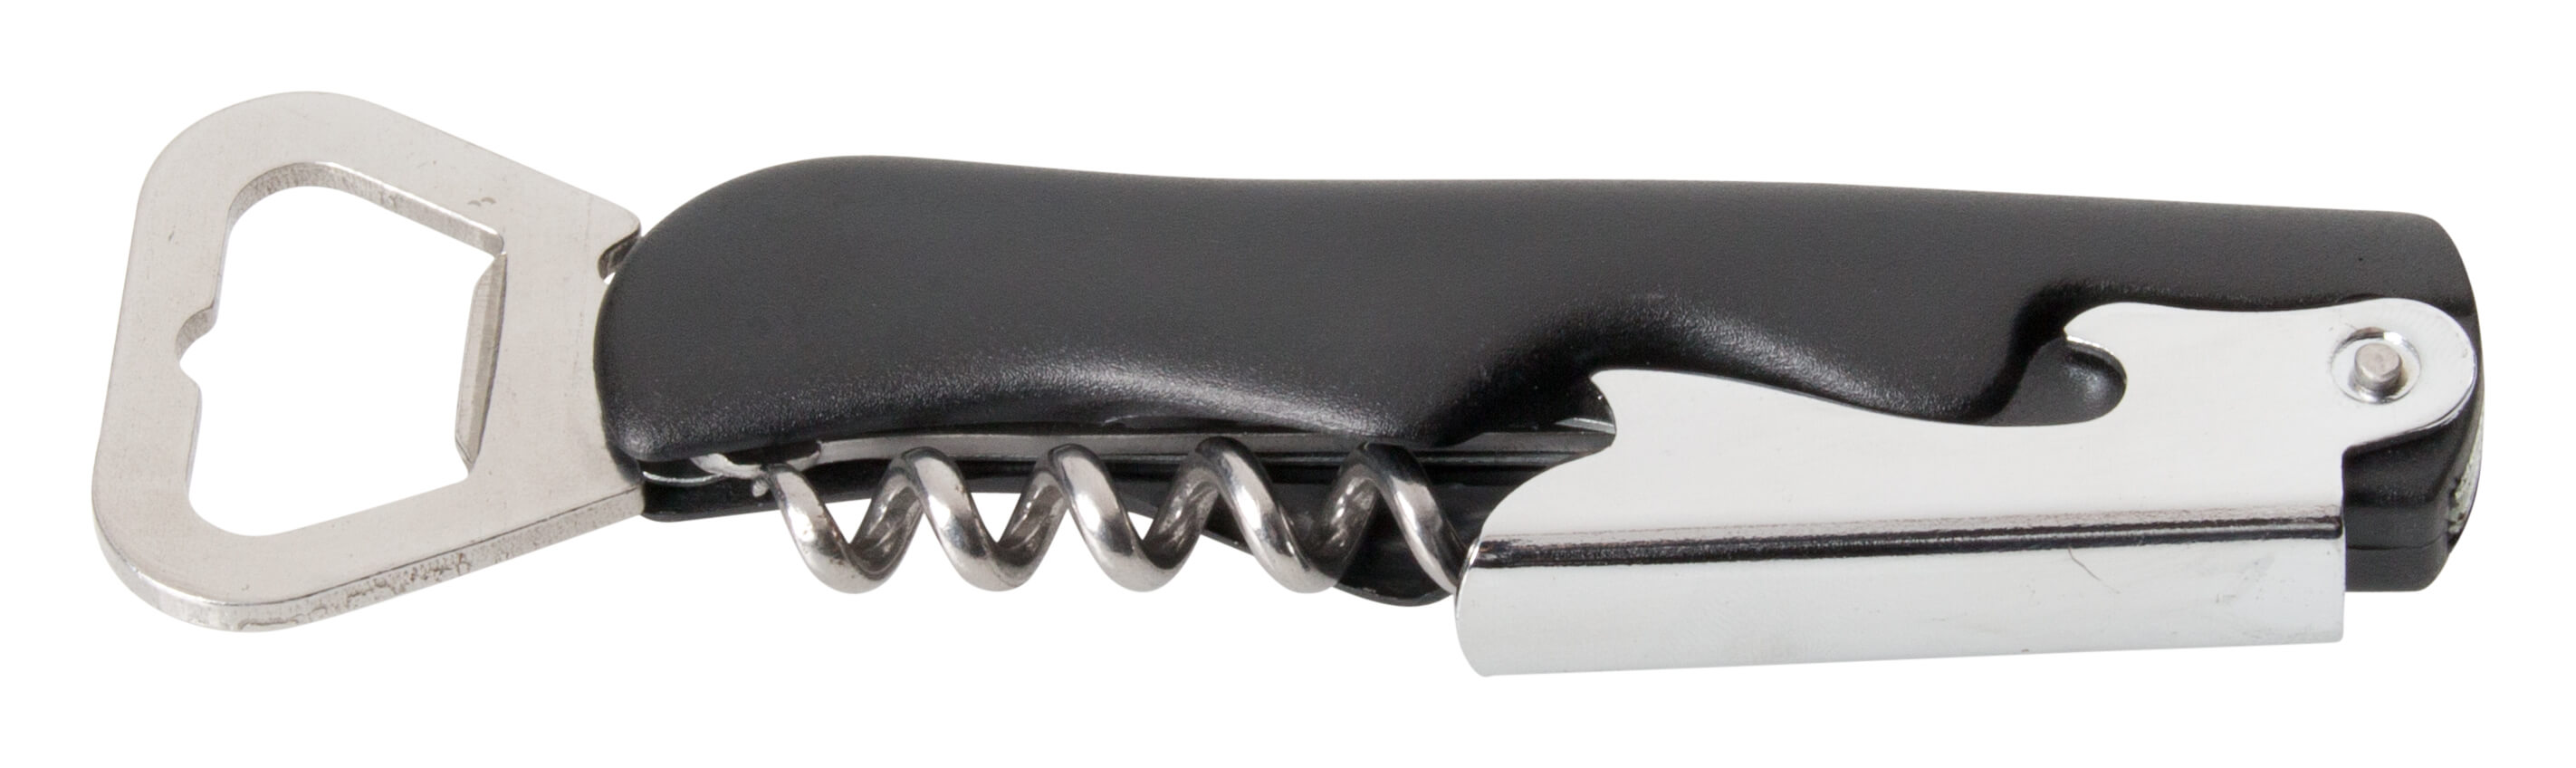 Corkscrew - plastic handle